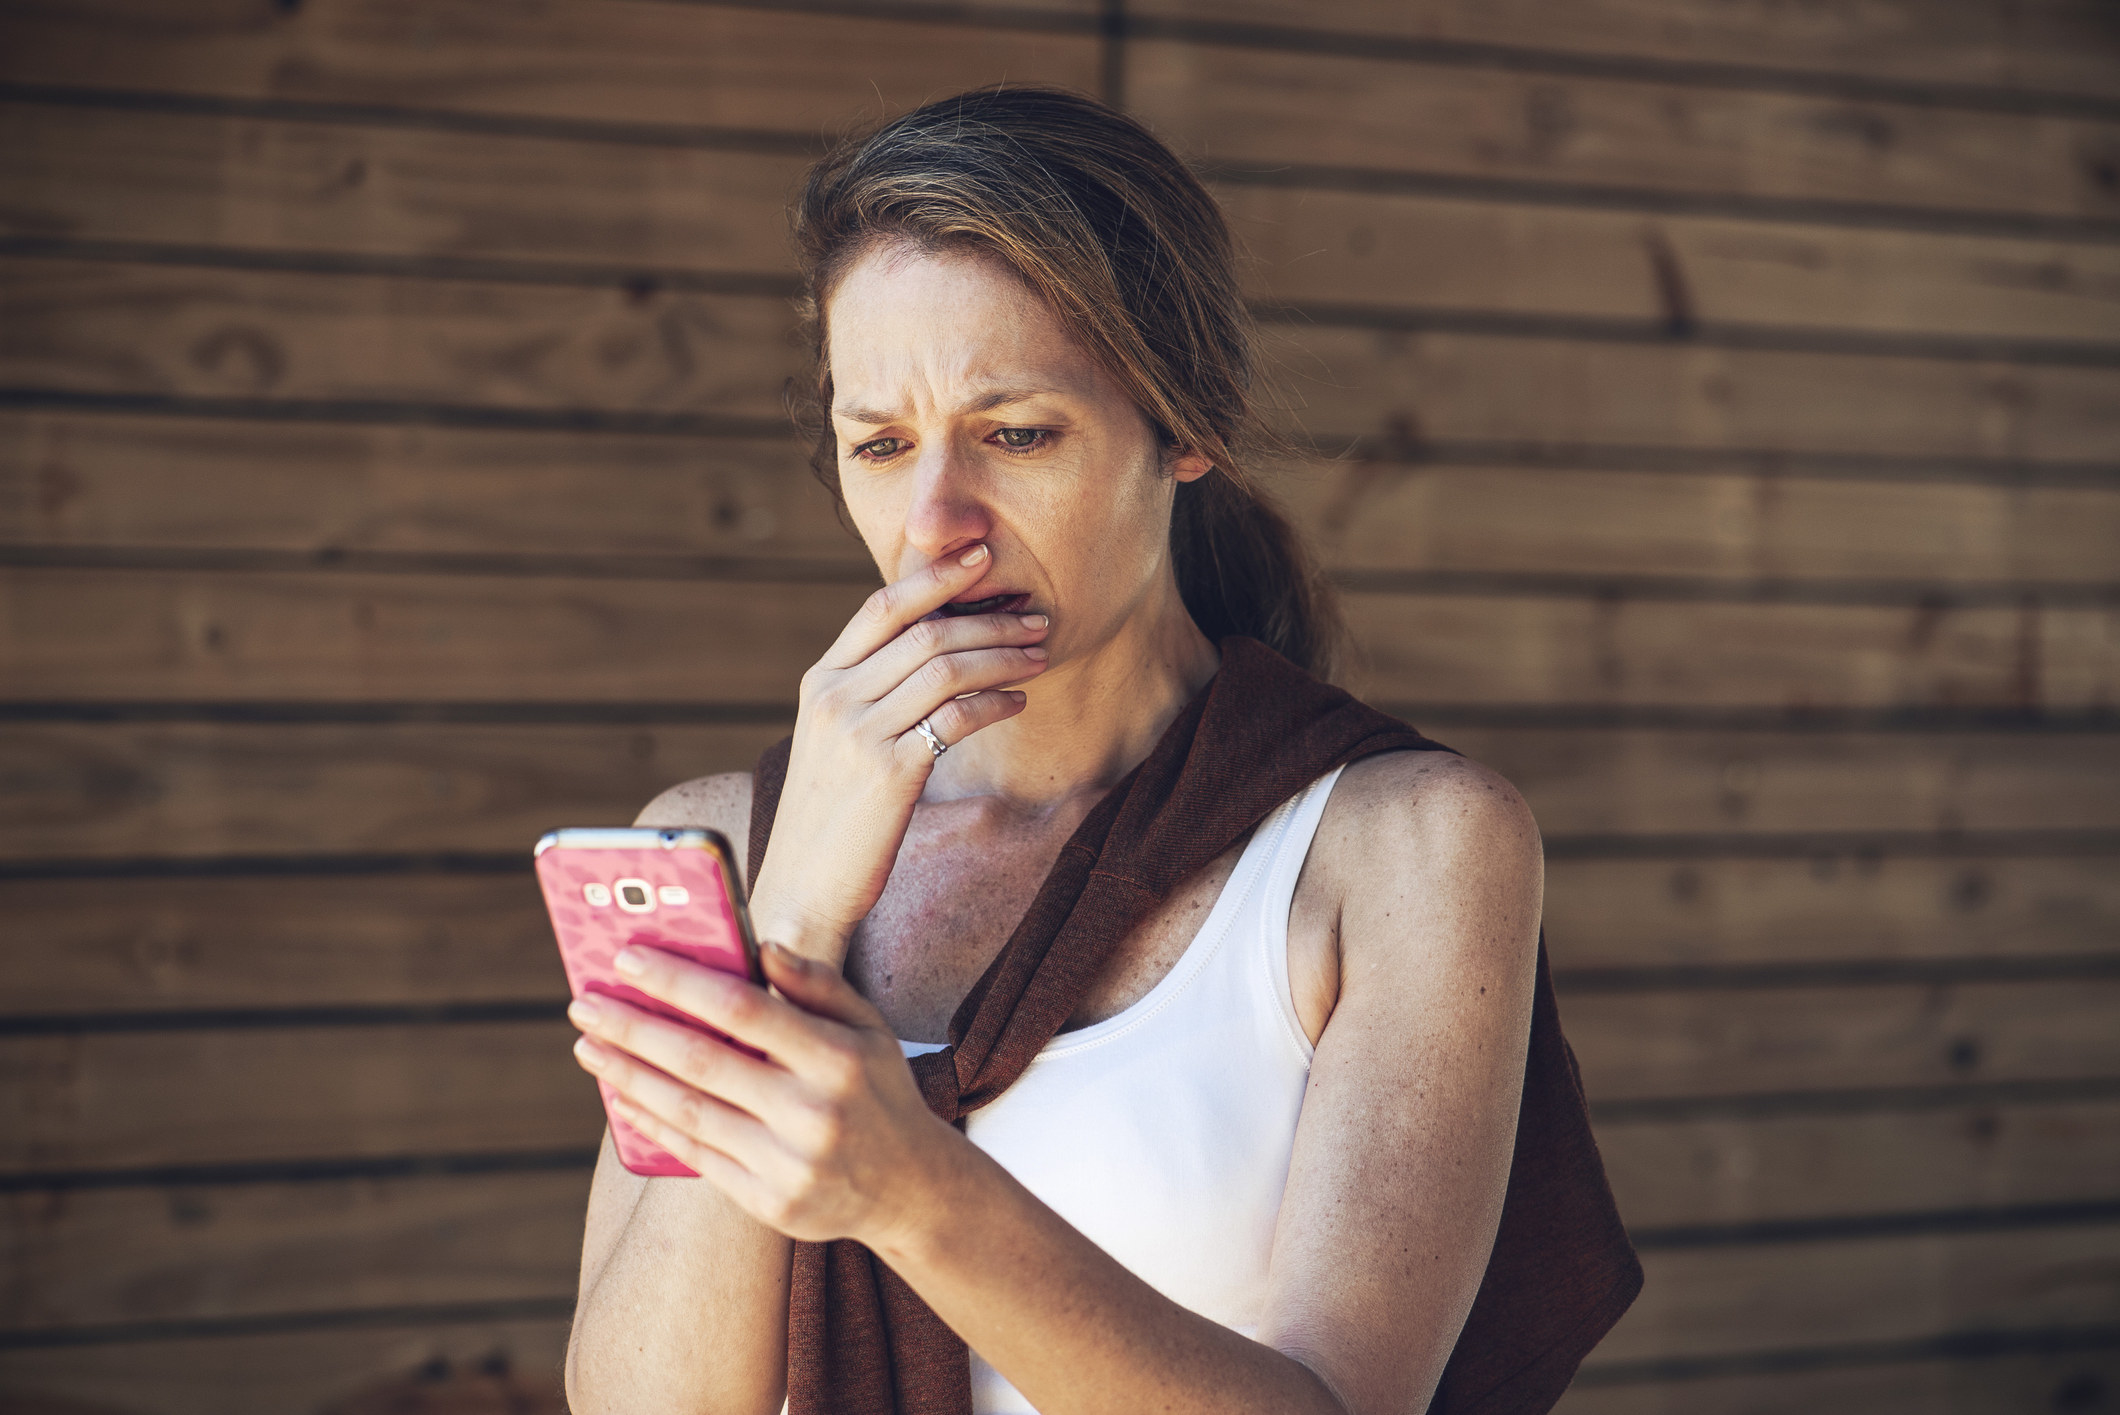 Woman looking at phone, shocked